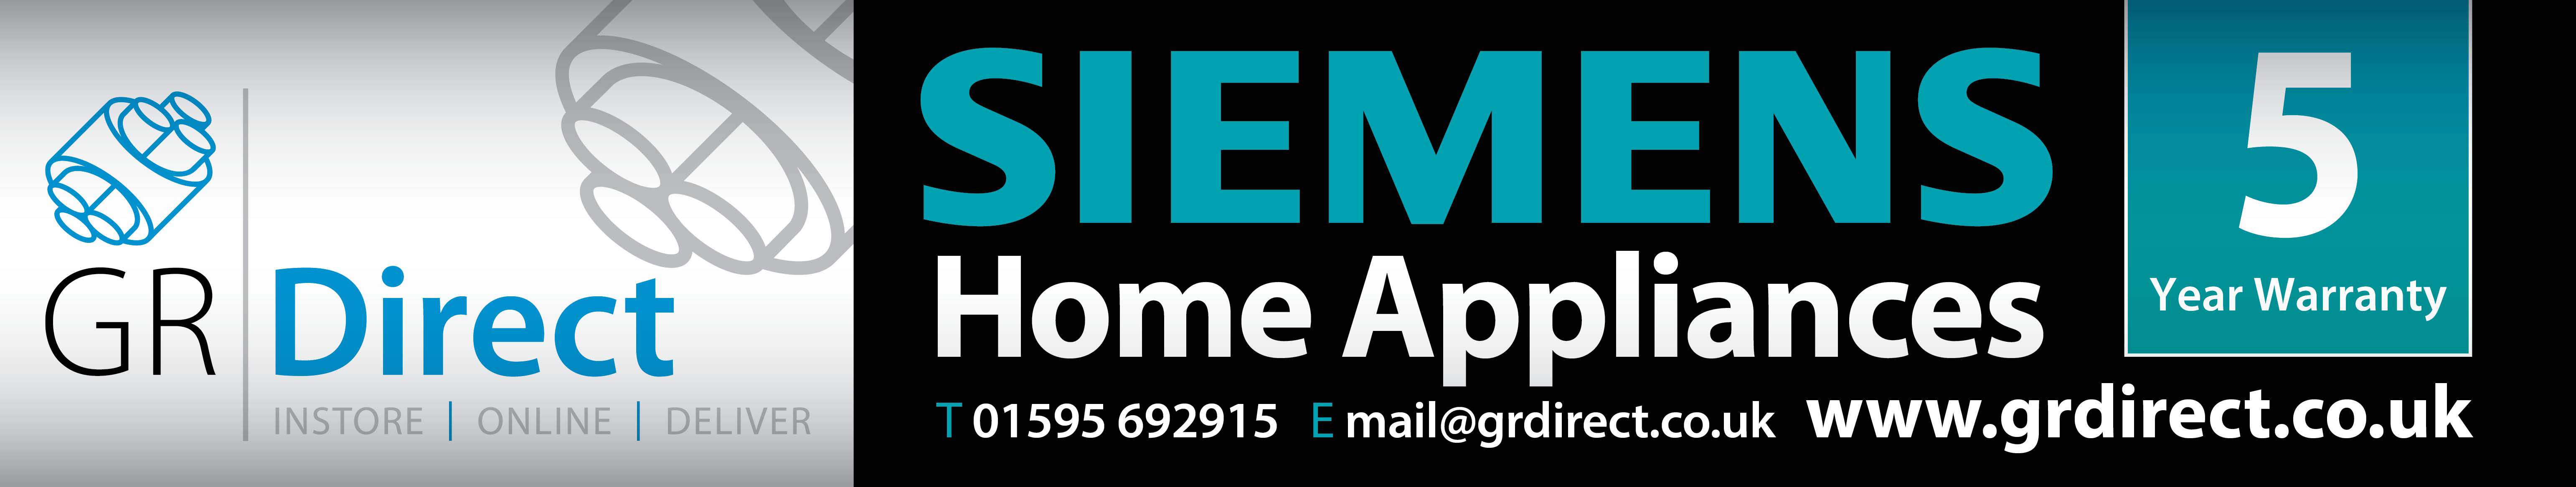 Siemens Home Appliances - 5 year warranty